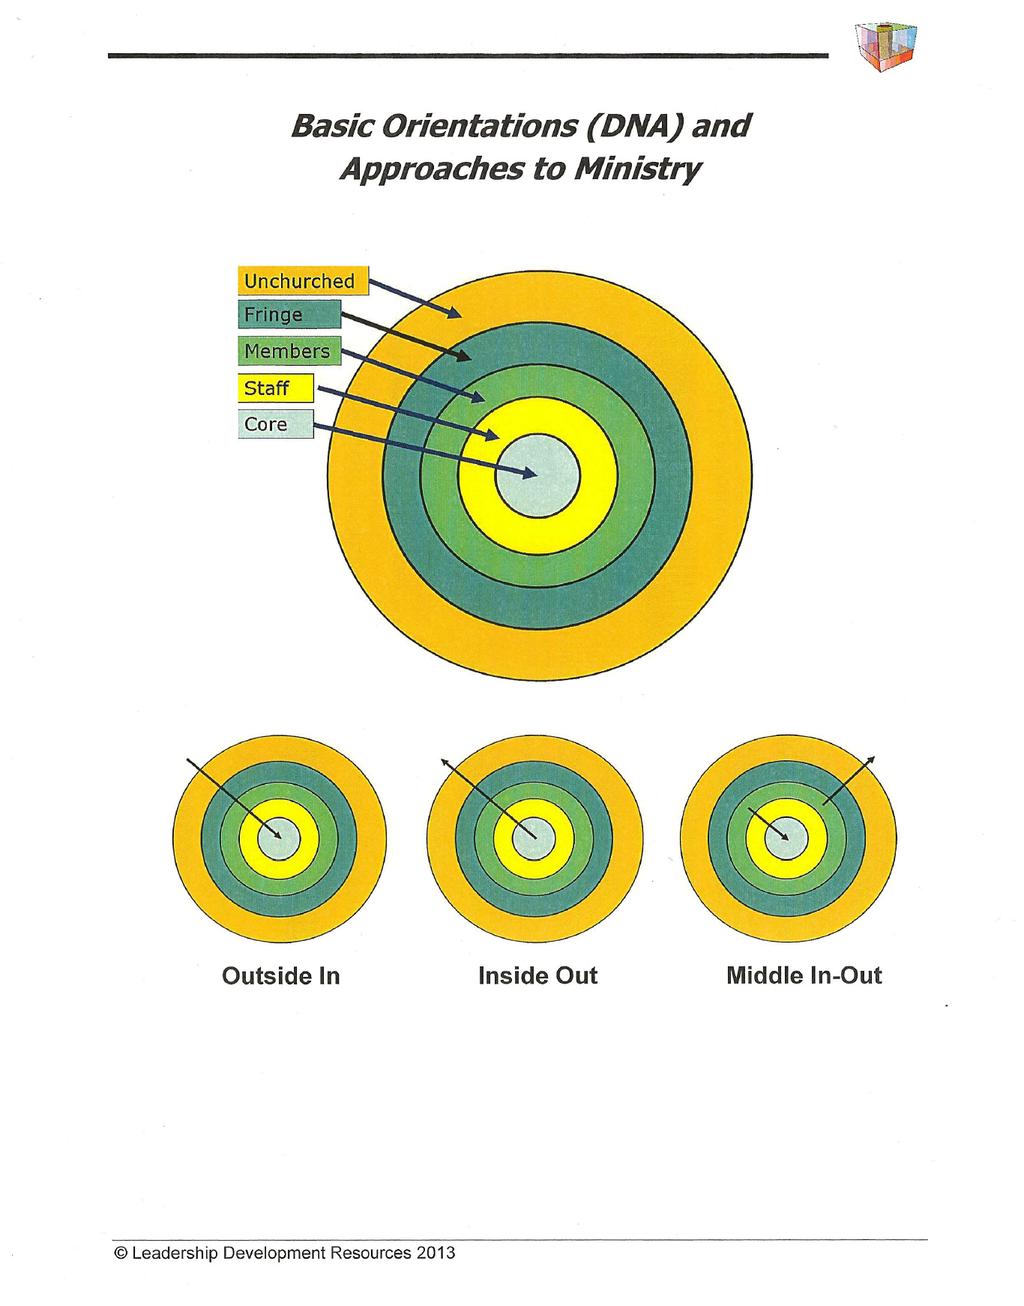 Northwest Ministry Network,